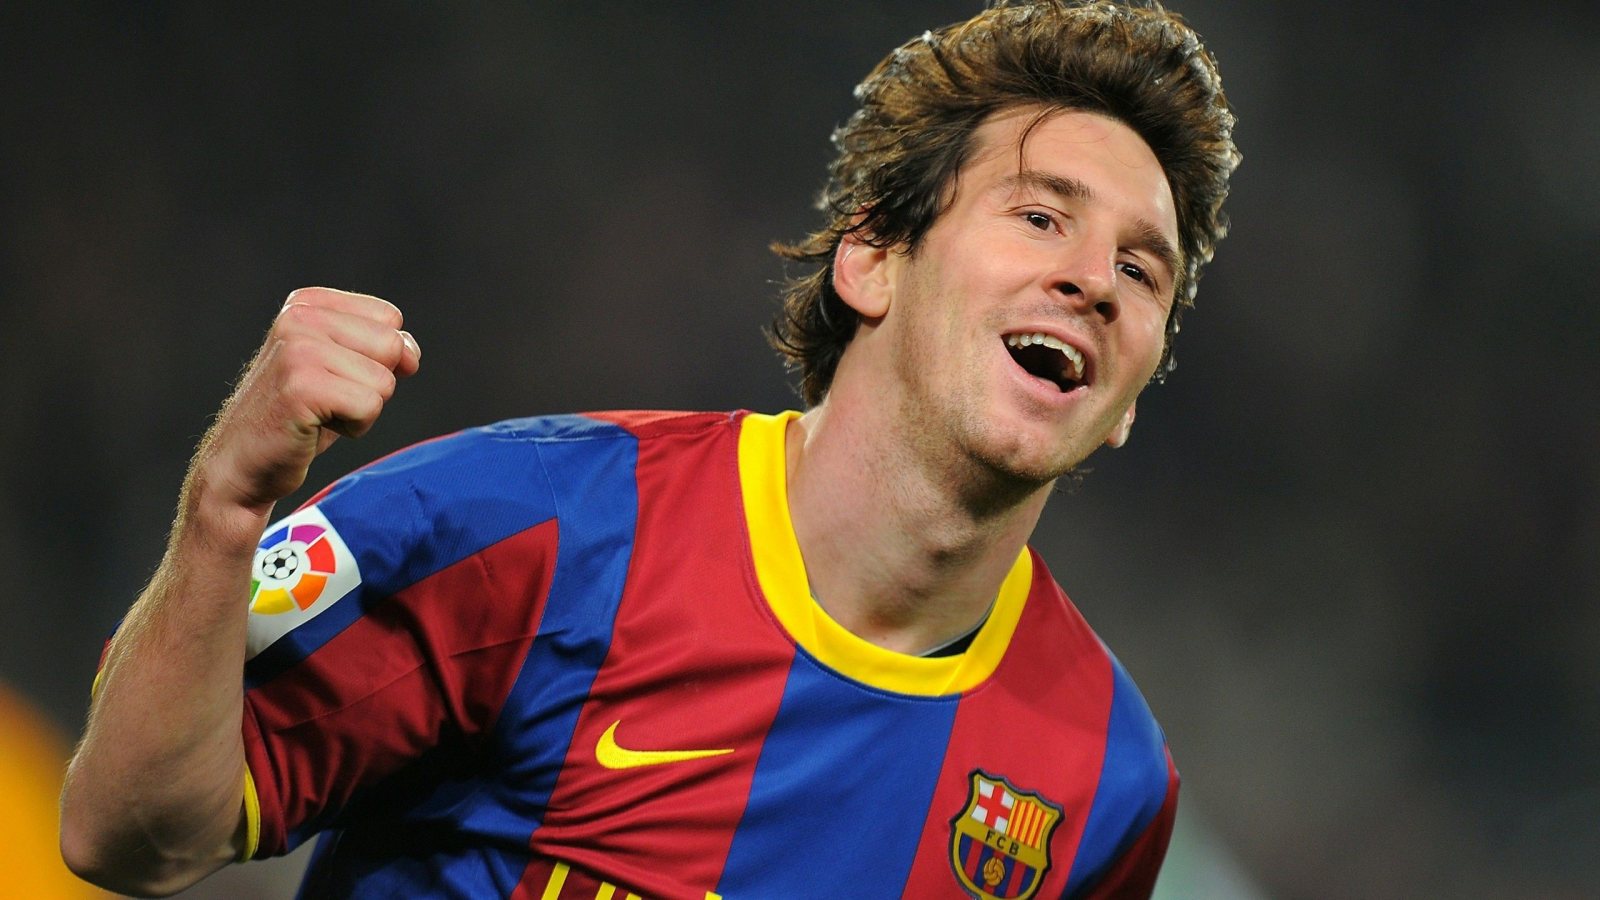 wallpaper free picture: Lionel Messi Wallpaper 2011 #2